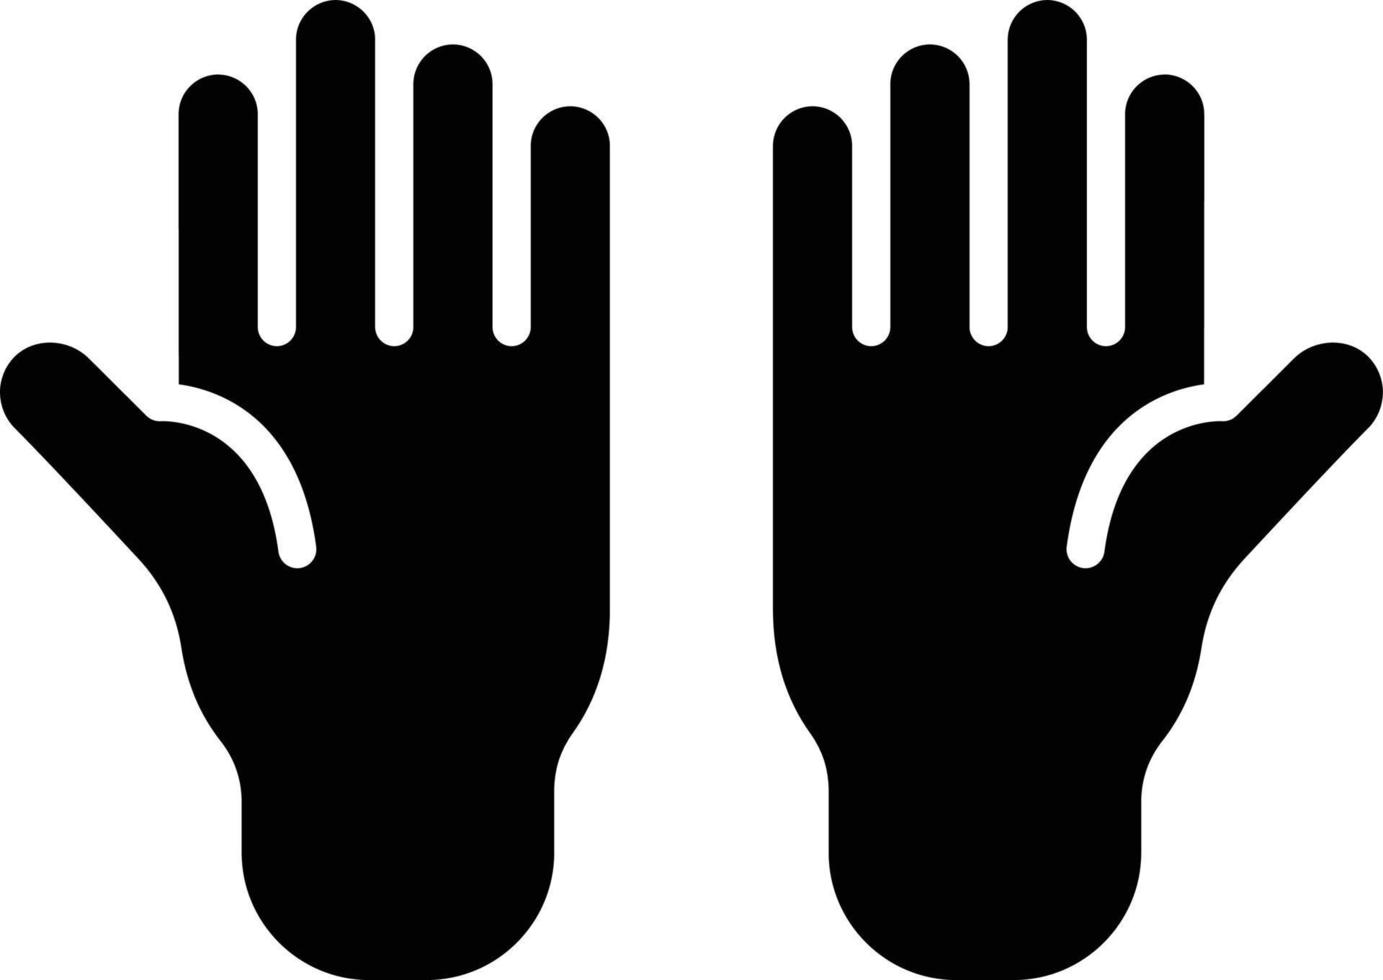 Gloves Vector Icon Design Illustration